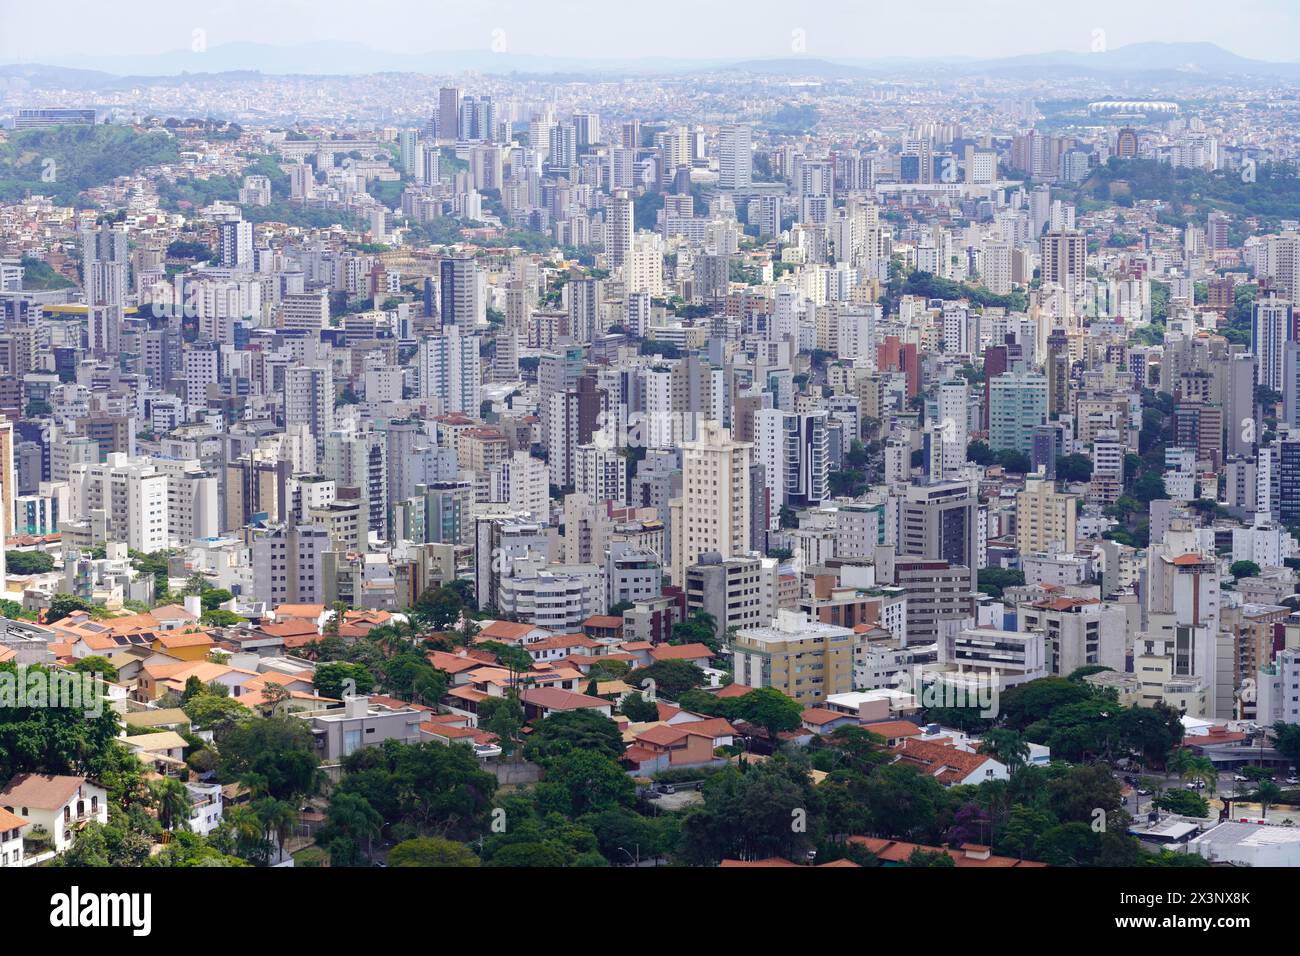 Skyscrapers in the metropolitan area of Belo Horizonte in Minas Gerais state, Brazil Stock Photo